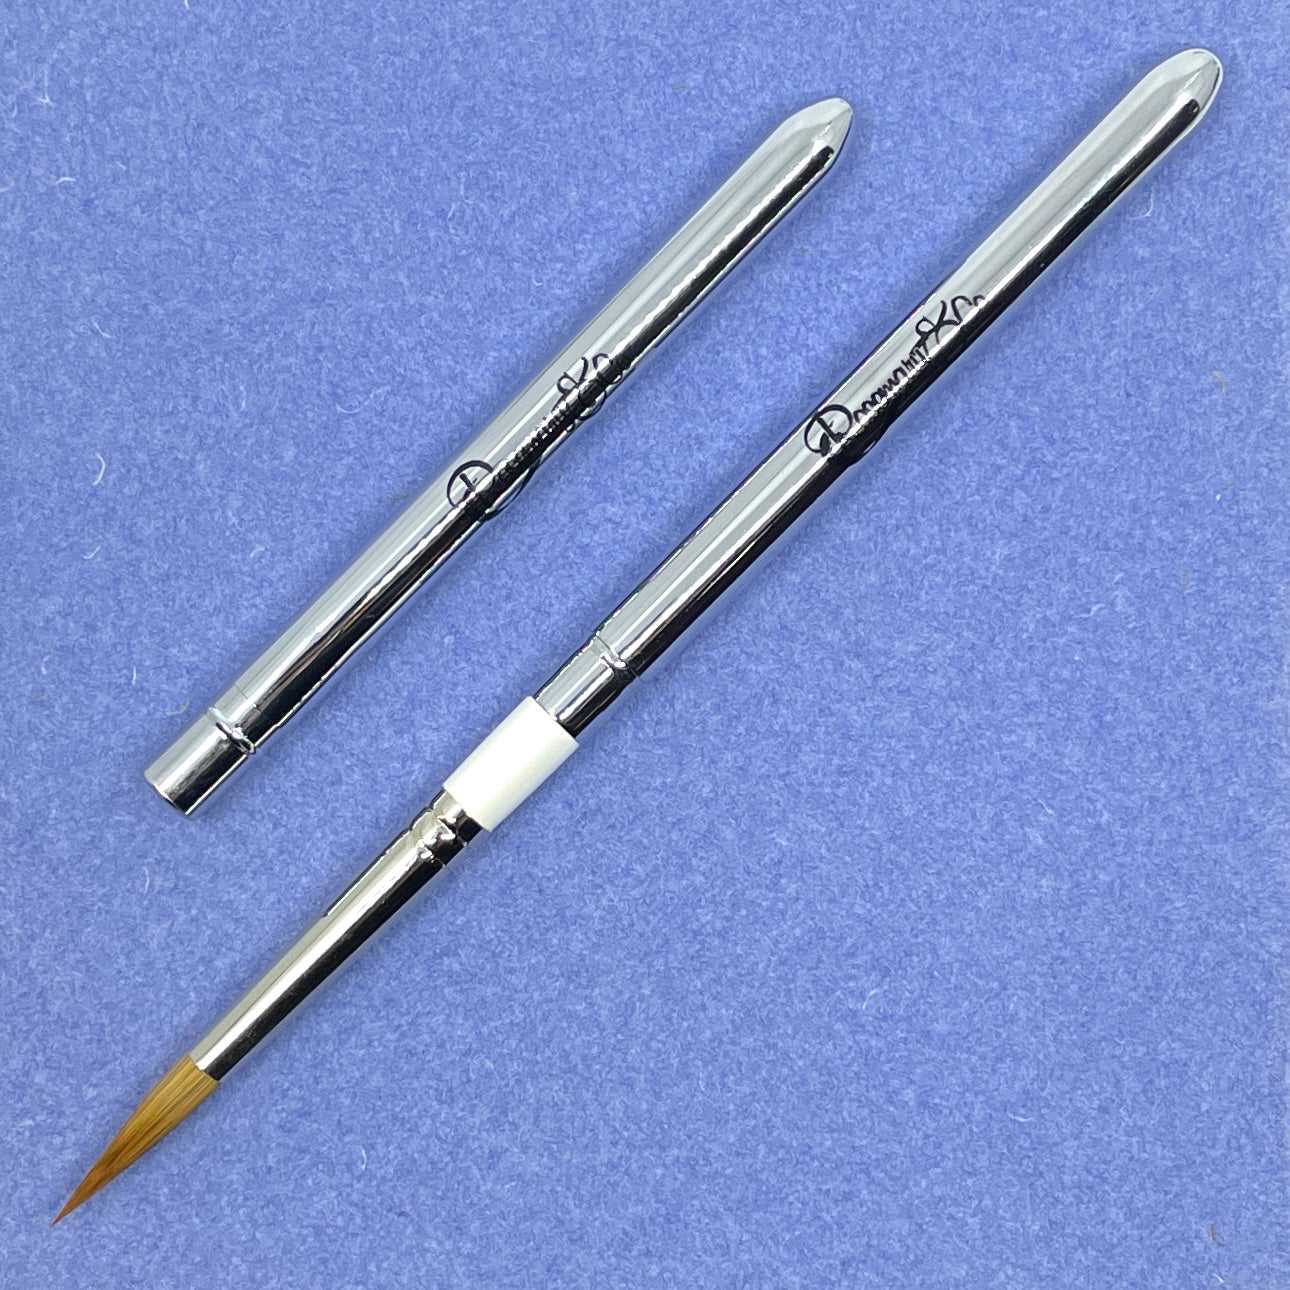 ROSEMARY & CO Reversible Pocket Brush - R13 - Sable Blend Designer - Pointed Size 8 (5 x 27mm)